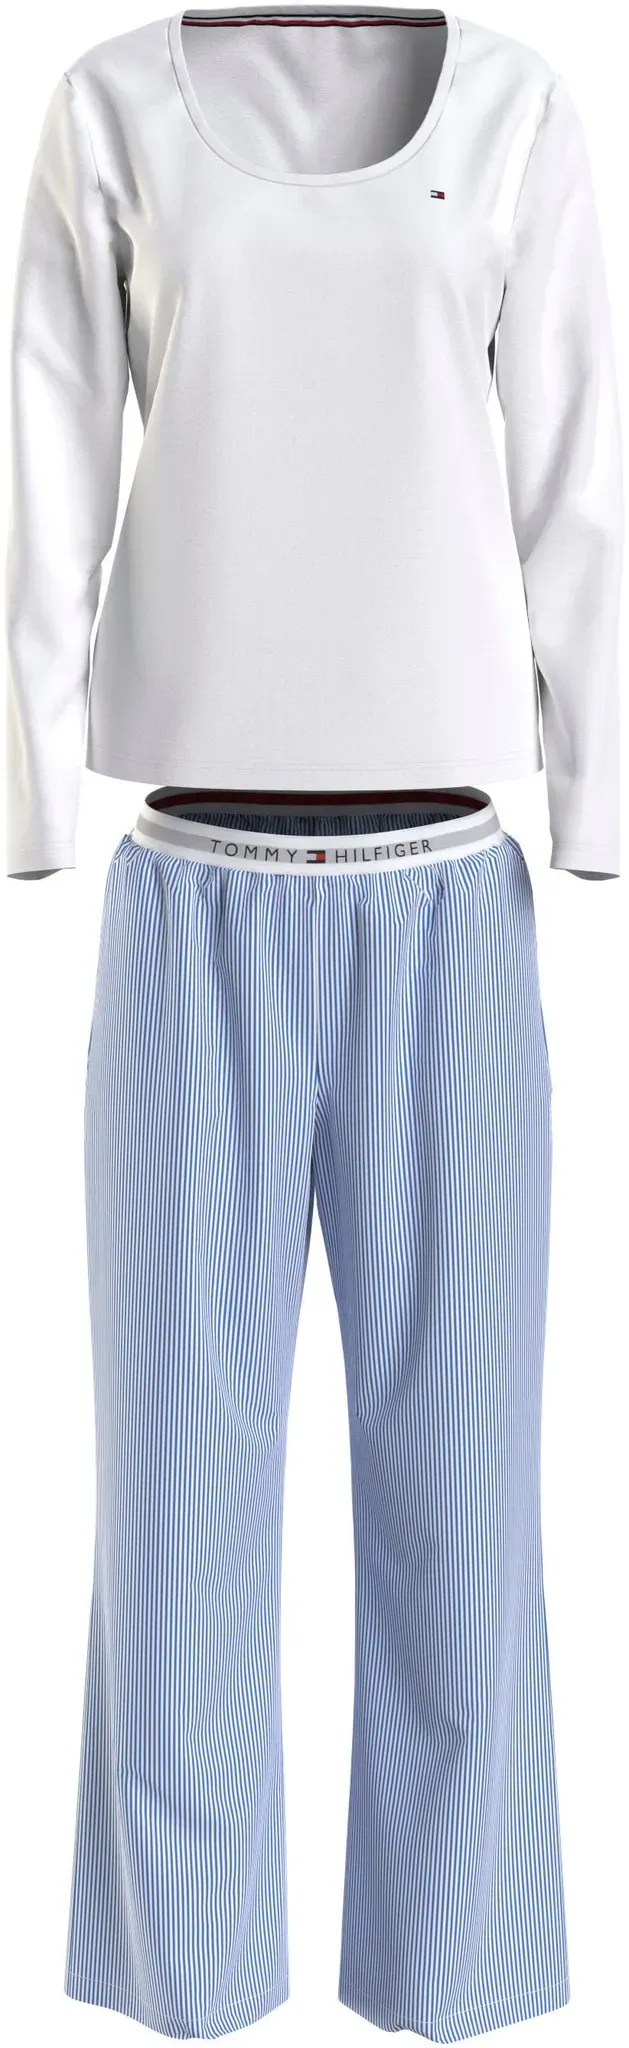 Pyjama TOMMY HILFIGER UNDERWEAR "TH LS PJ SET WOVEN" Gr. XS (34), blau (white, ithaca stripe blue spell) Damen Homewear-Sets Pyjamas Shirt uni, Hose gestreift